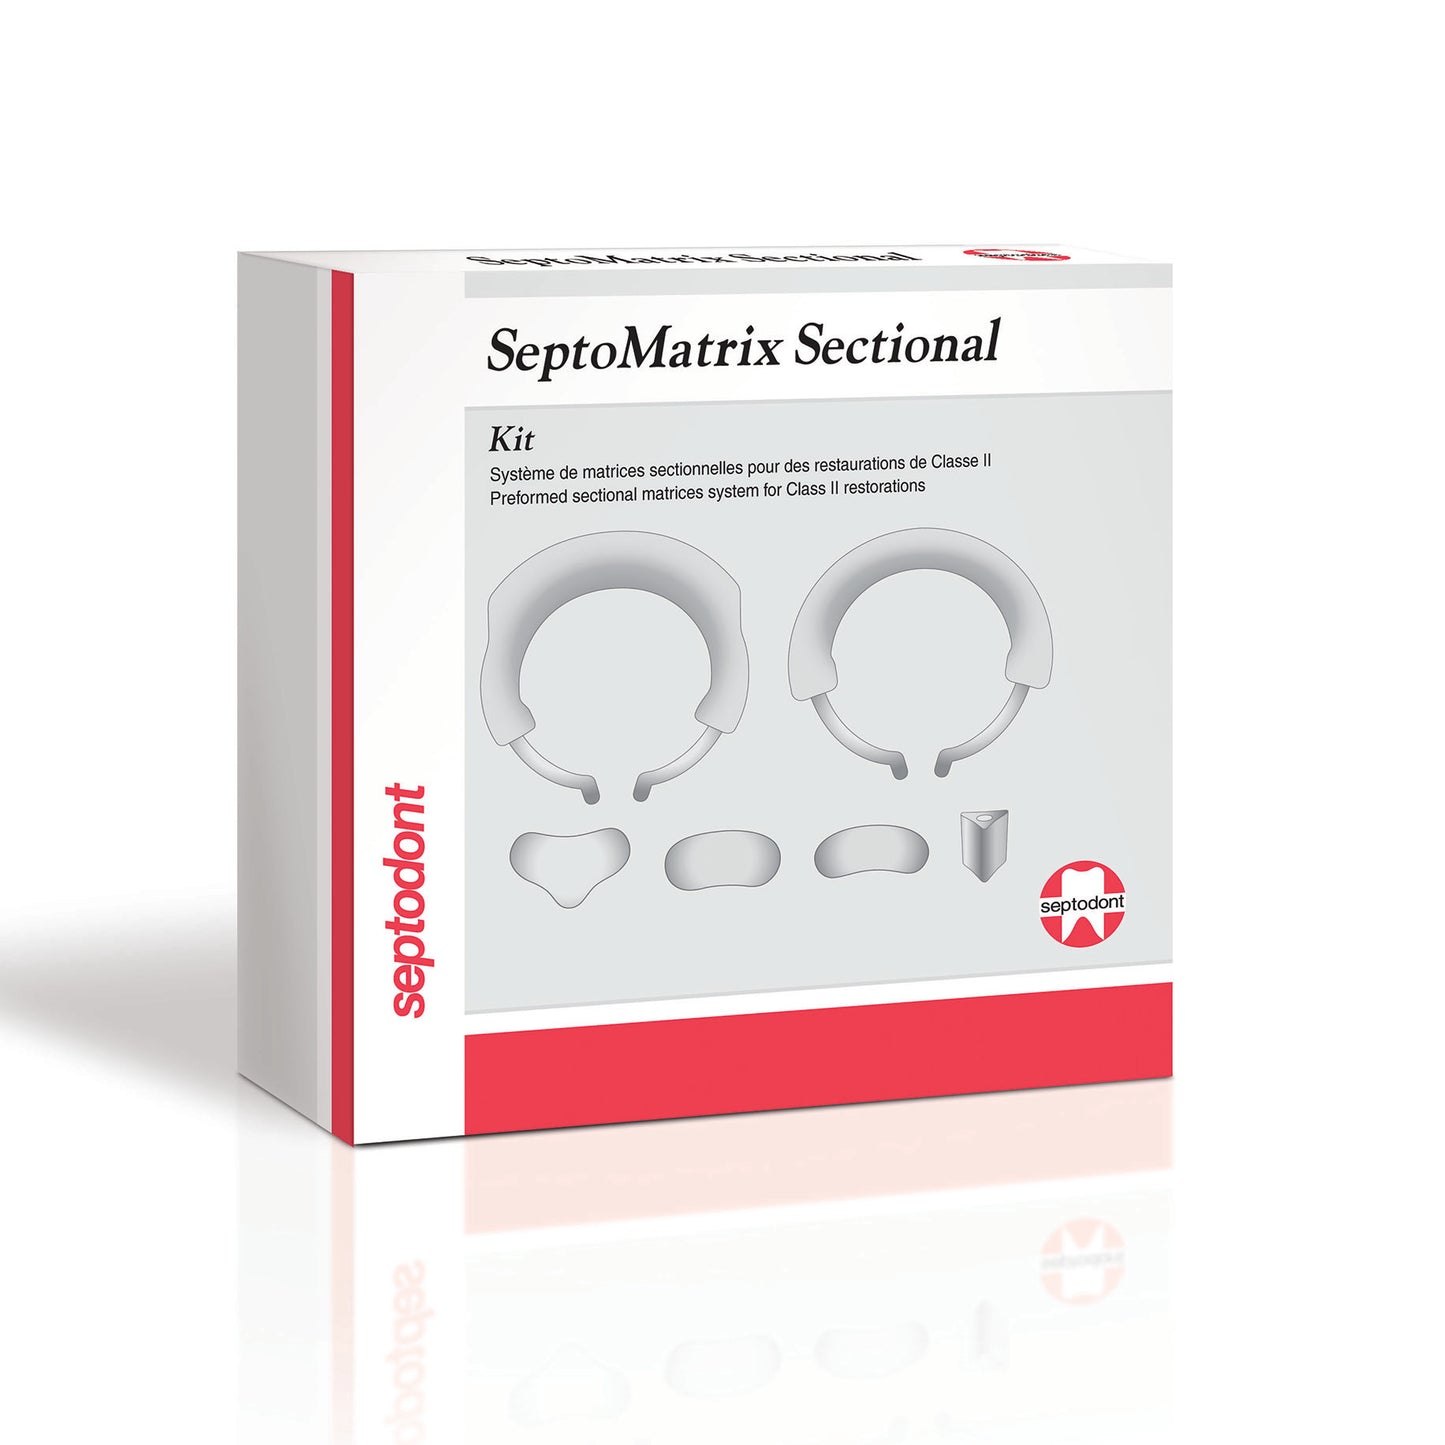 SeptoMatrix Sectional Kit 100 Assorted